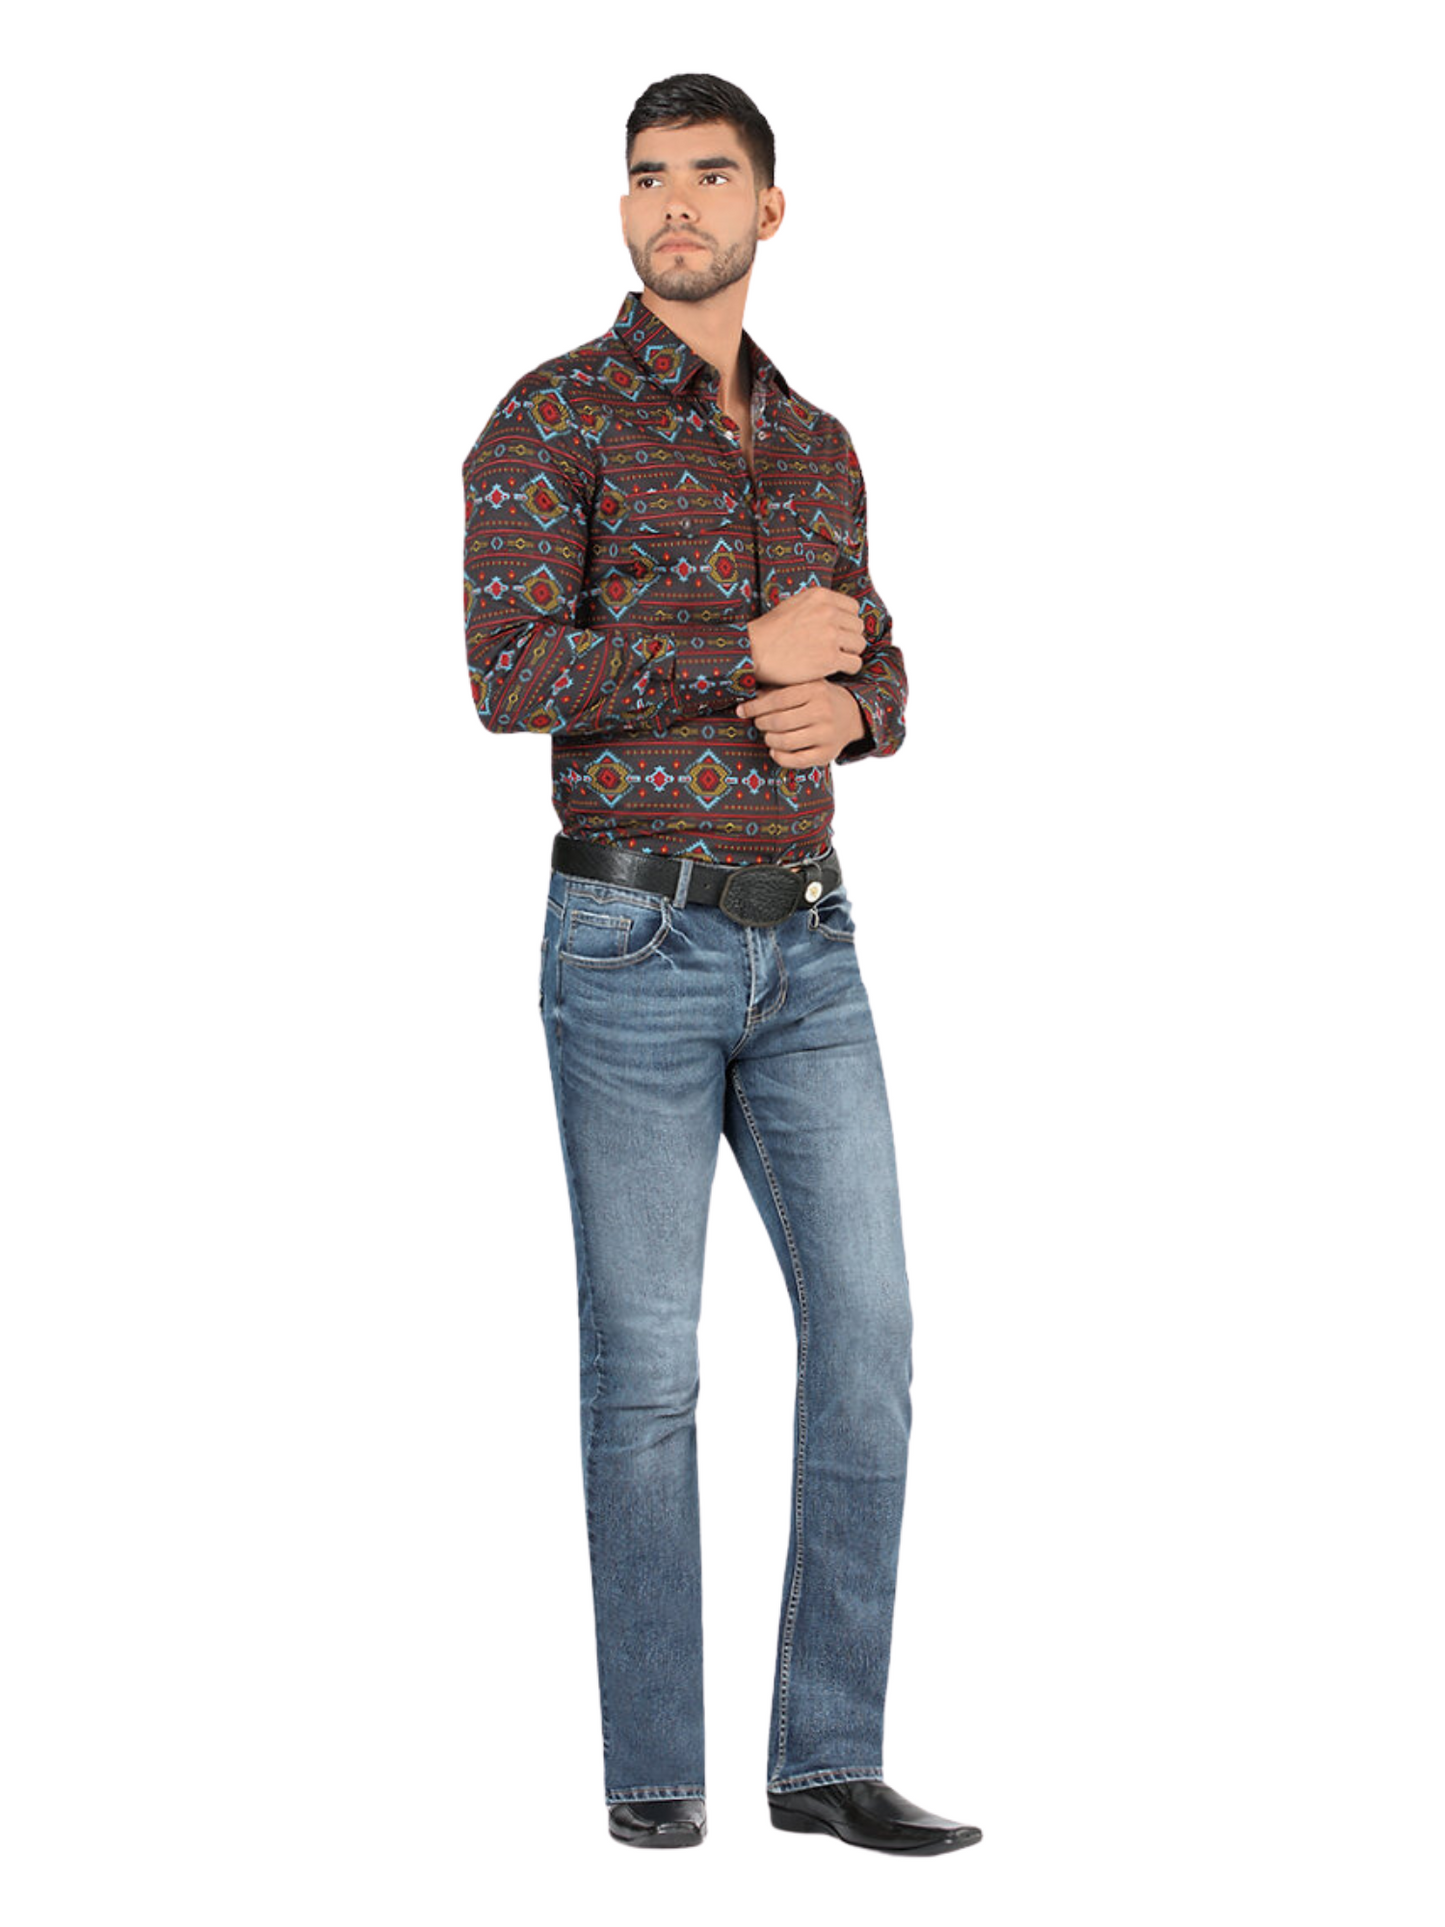 Stretch Denim Jeans for Men 'Montero' - ID: 5305 Denim Jeans Montero Medium Blue